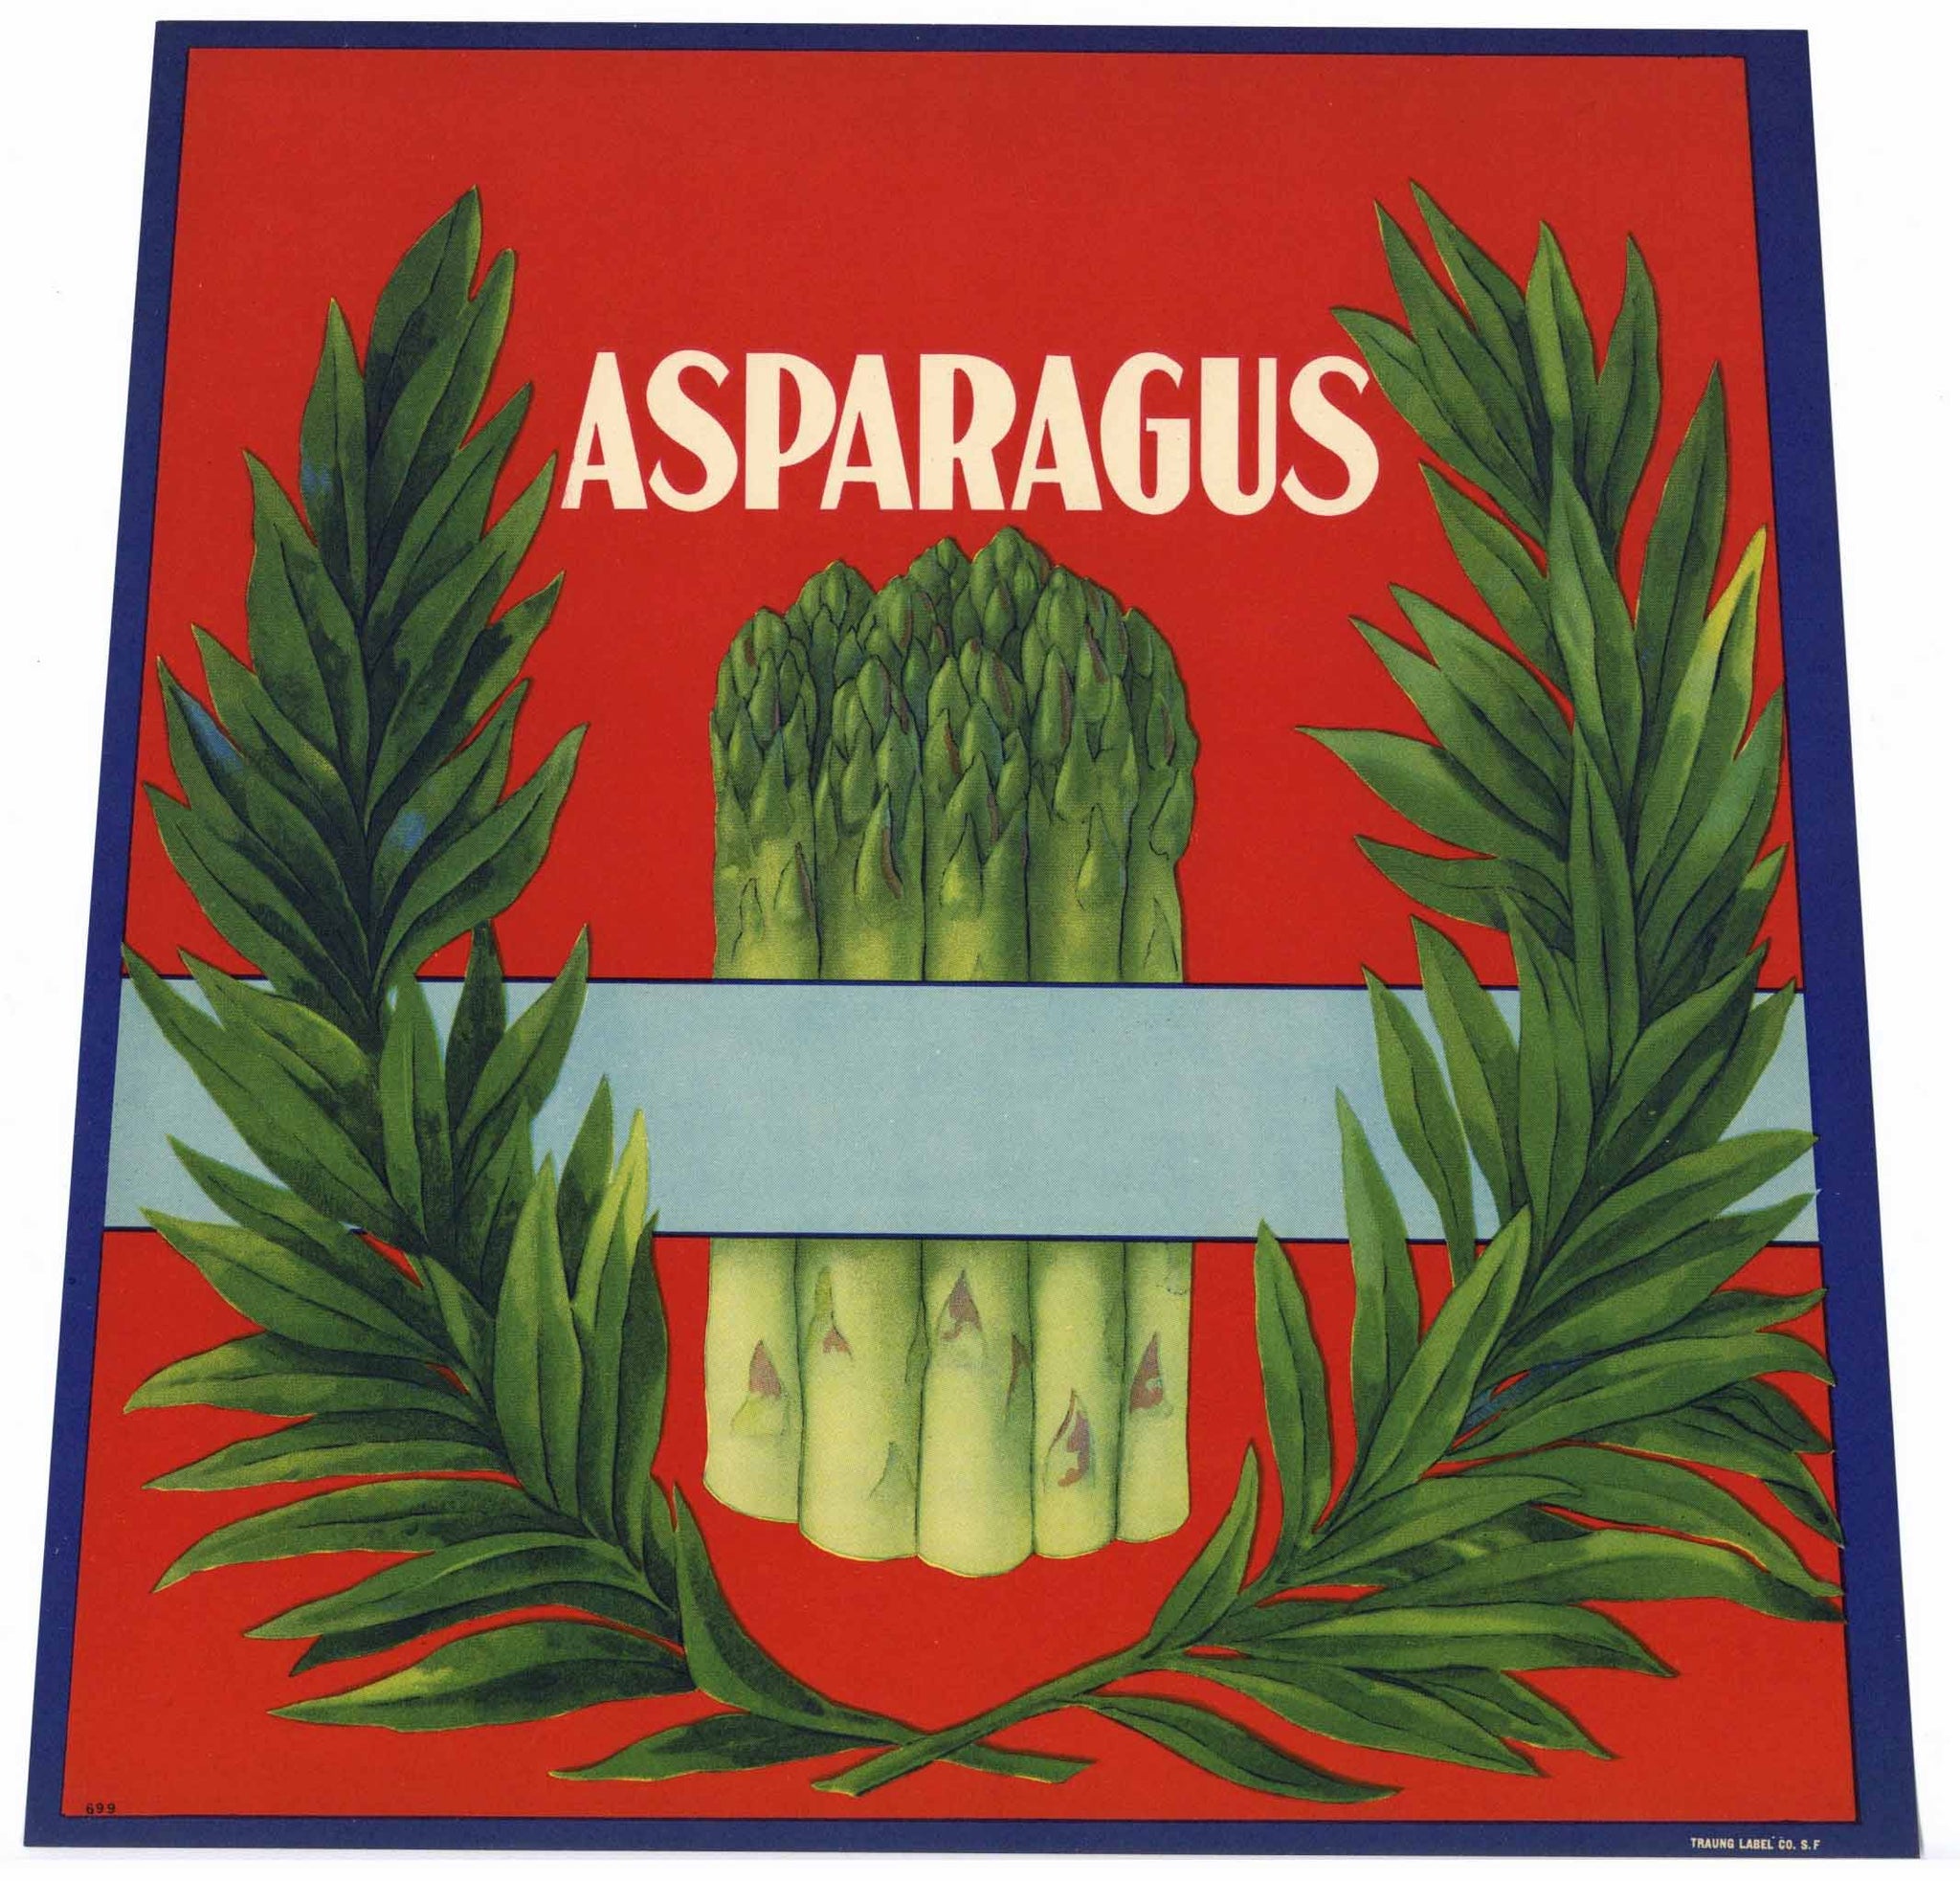 Asparagus Stock #699 Vintage Vegetable Crate Label